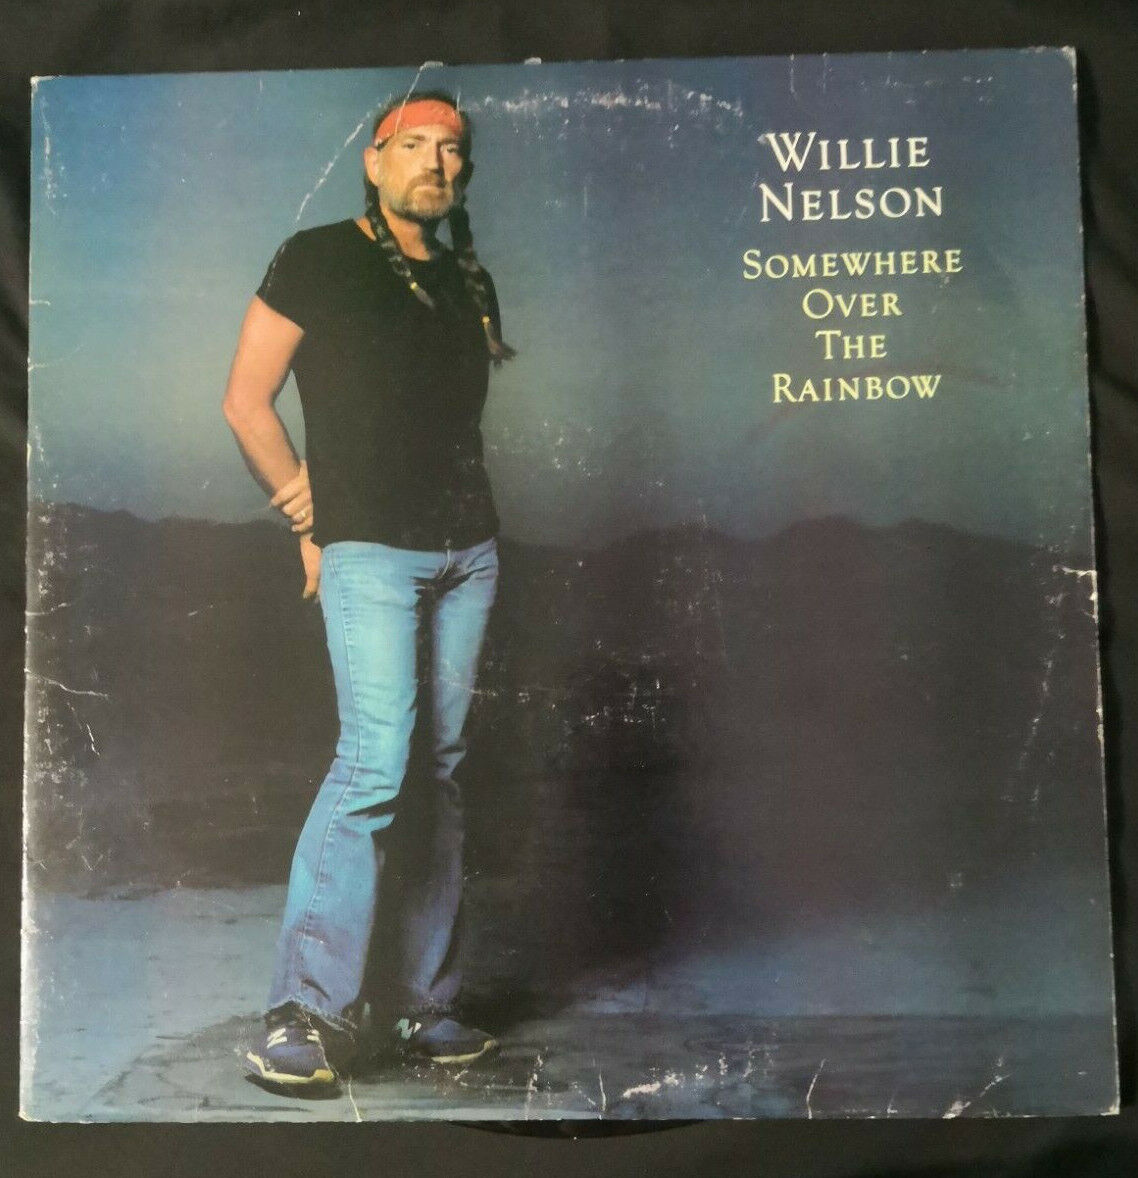 Willie Nelson Somewhere Over The Rainbow Vinyl LP FC36883 1981 VG++/VG [B]